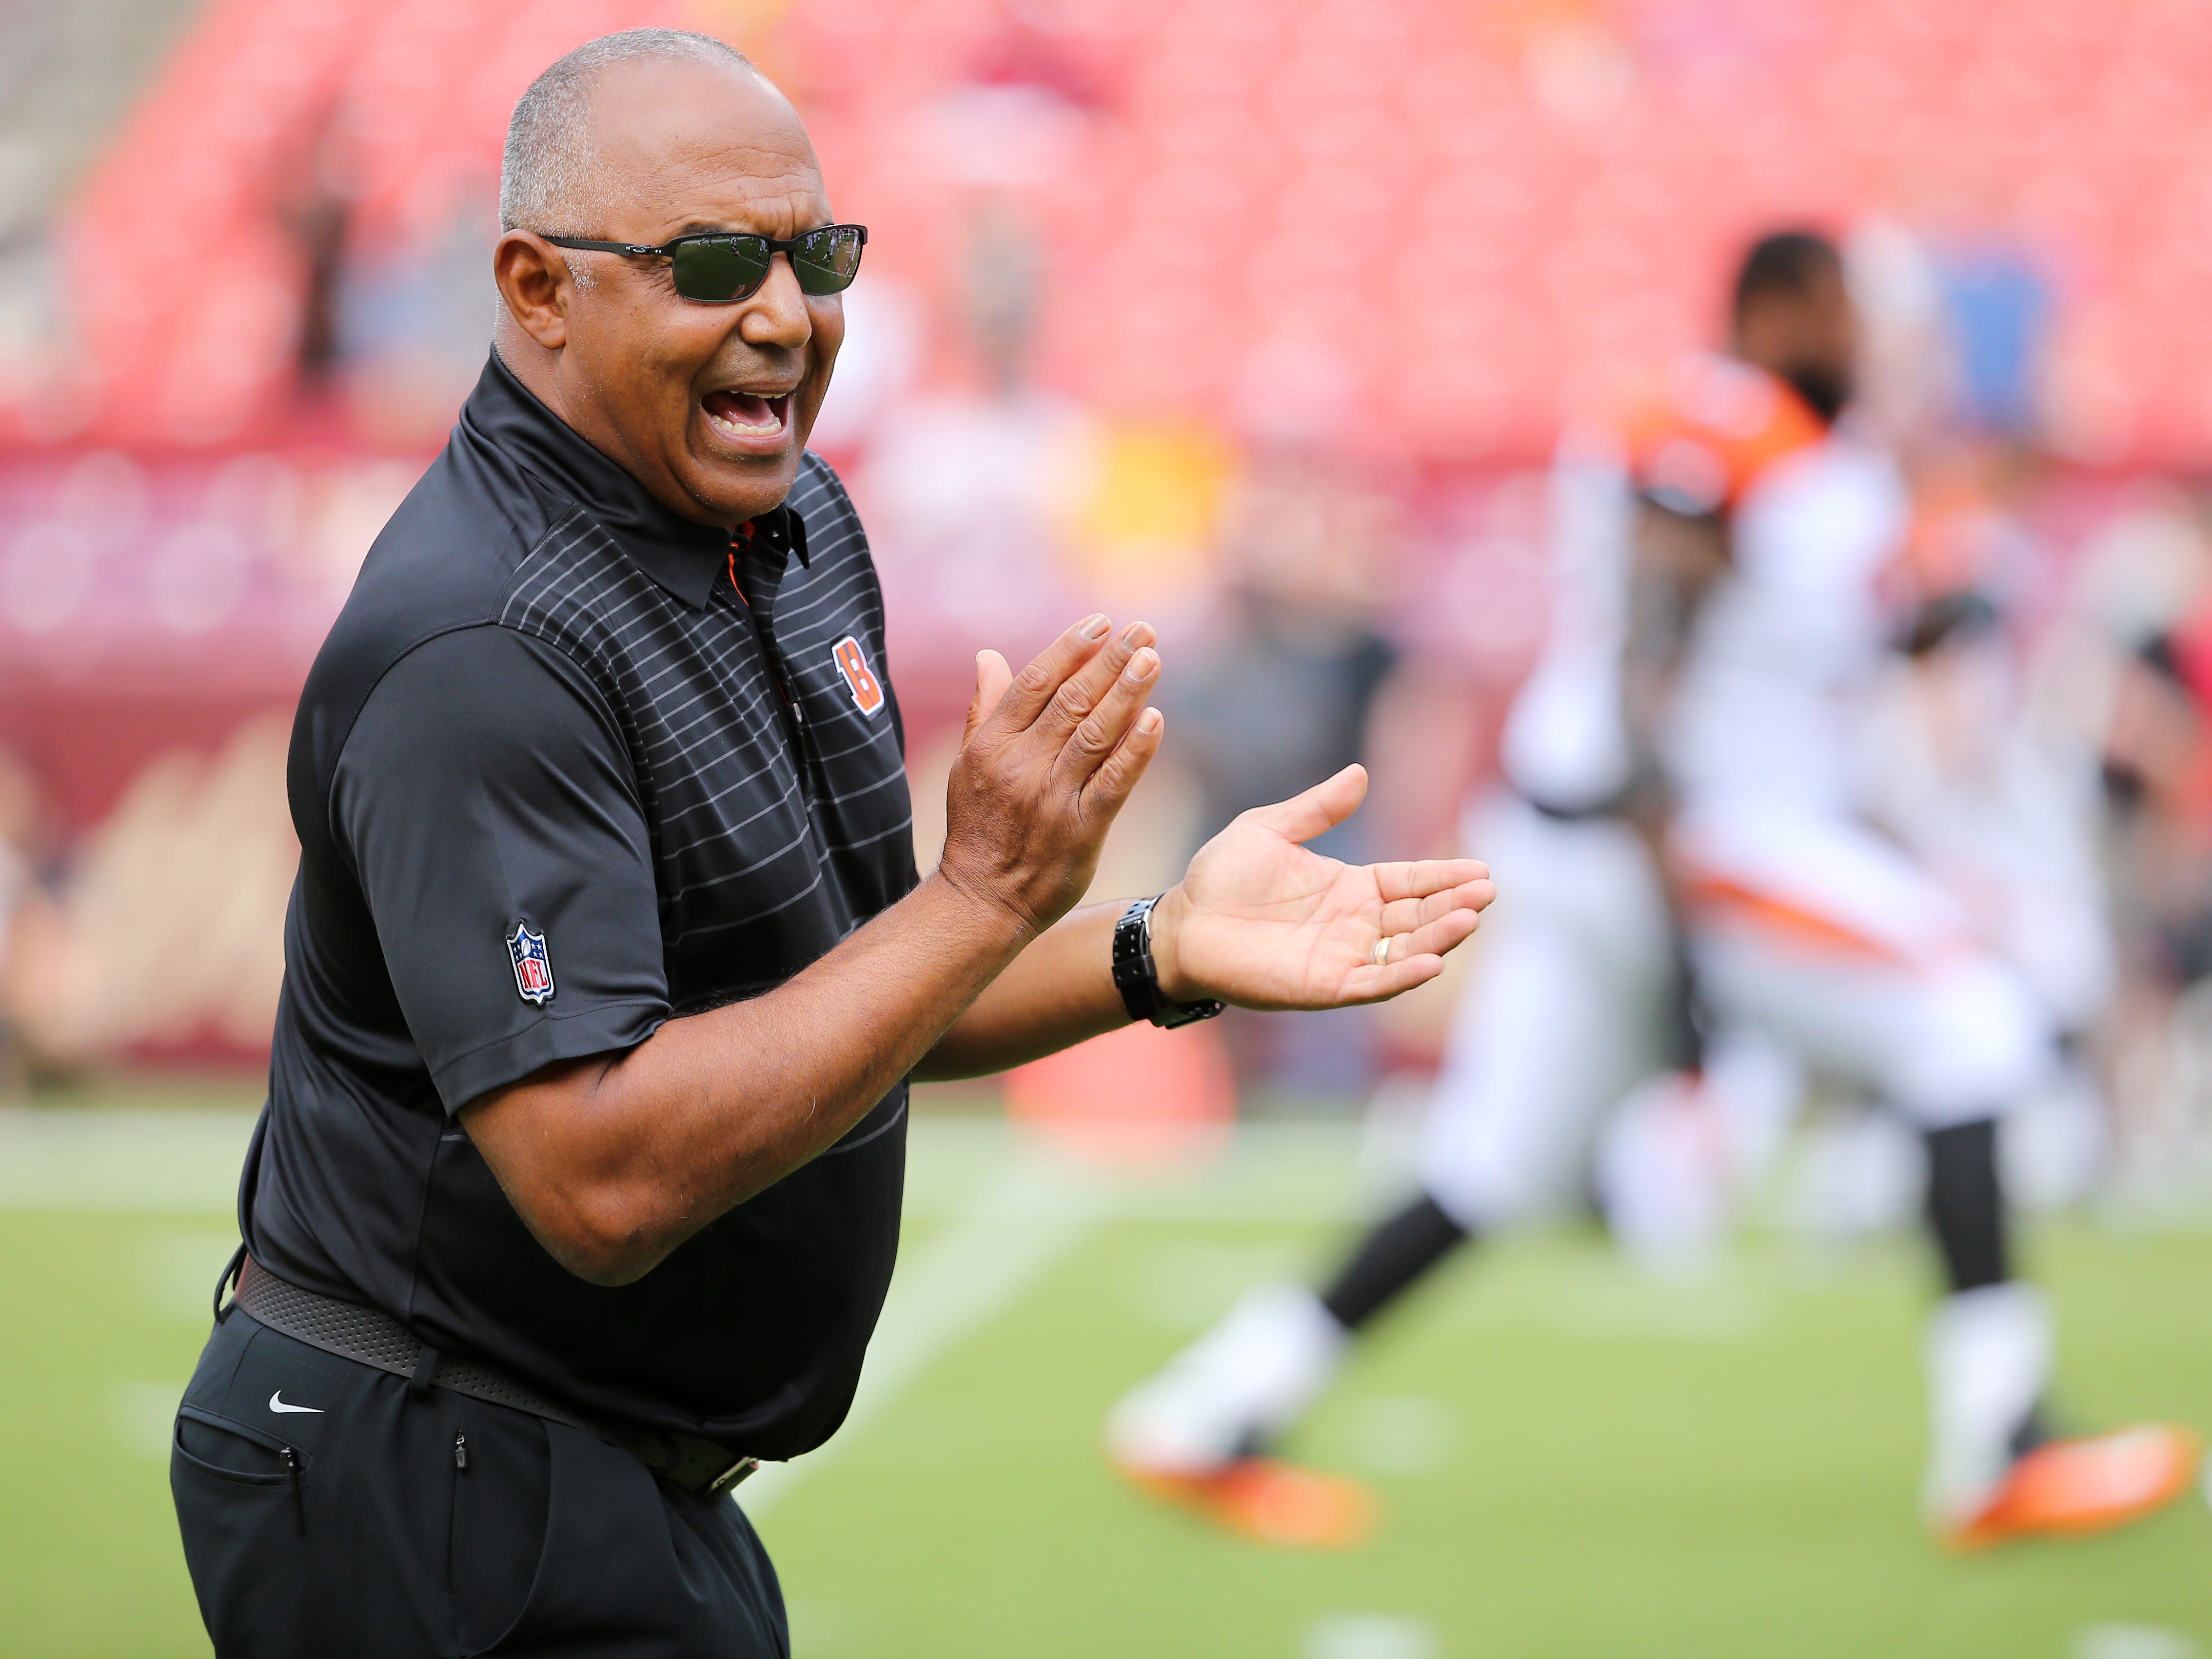 Marvin Lewis returns as Cincinnati Bengals’ head coach through 2019